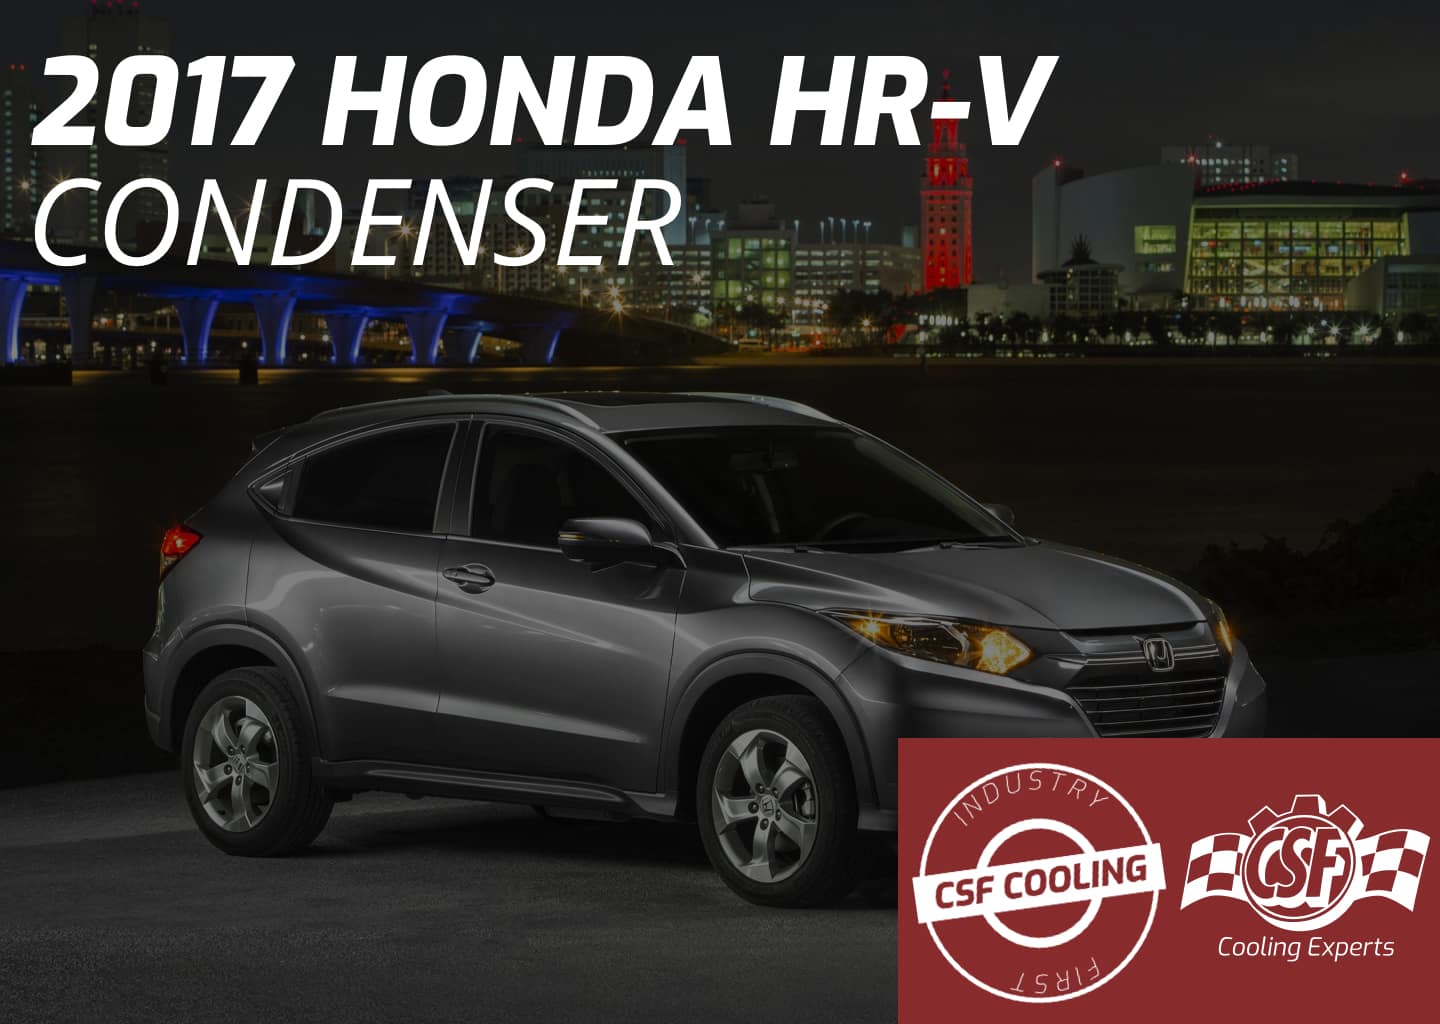 2017 Honda HR-V Condenser